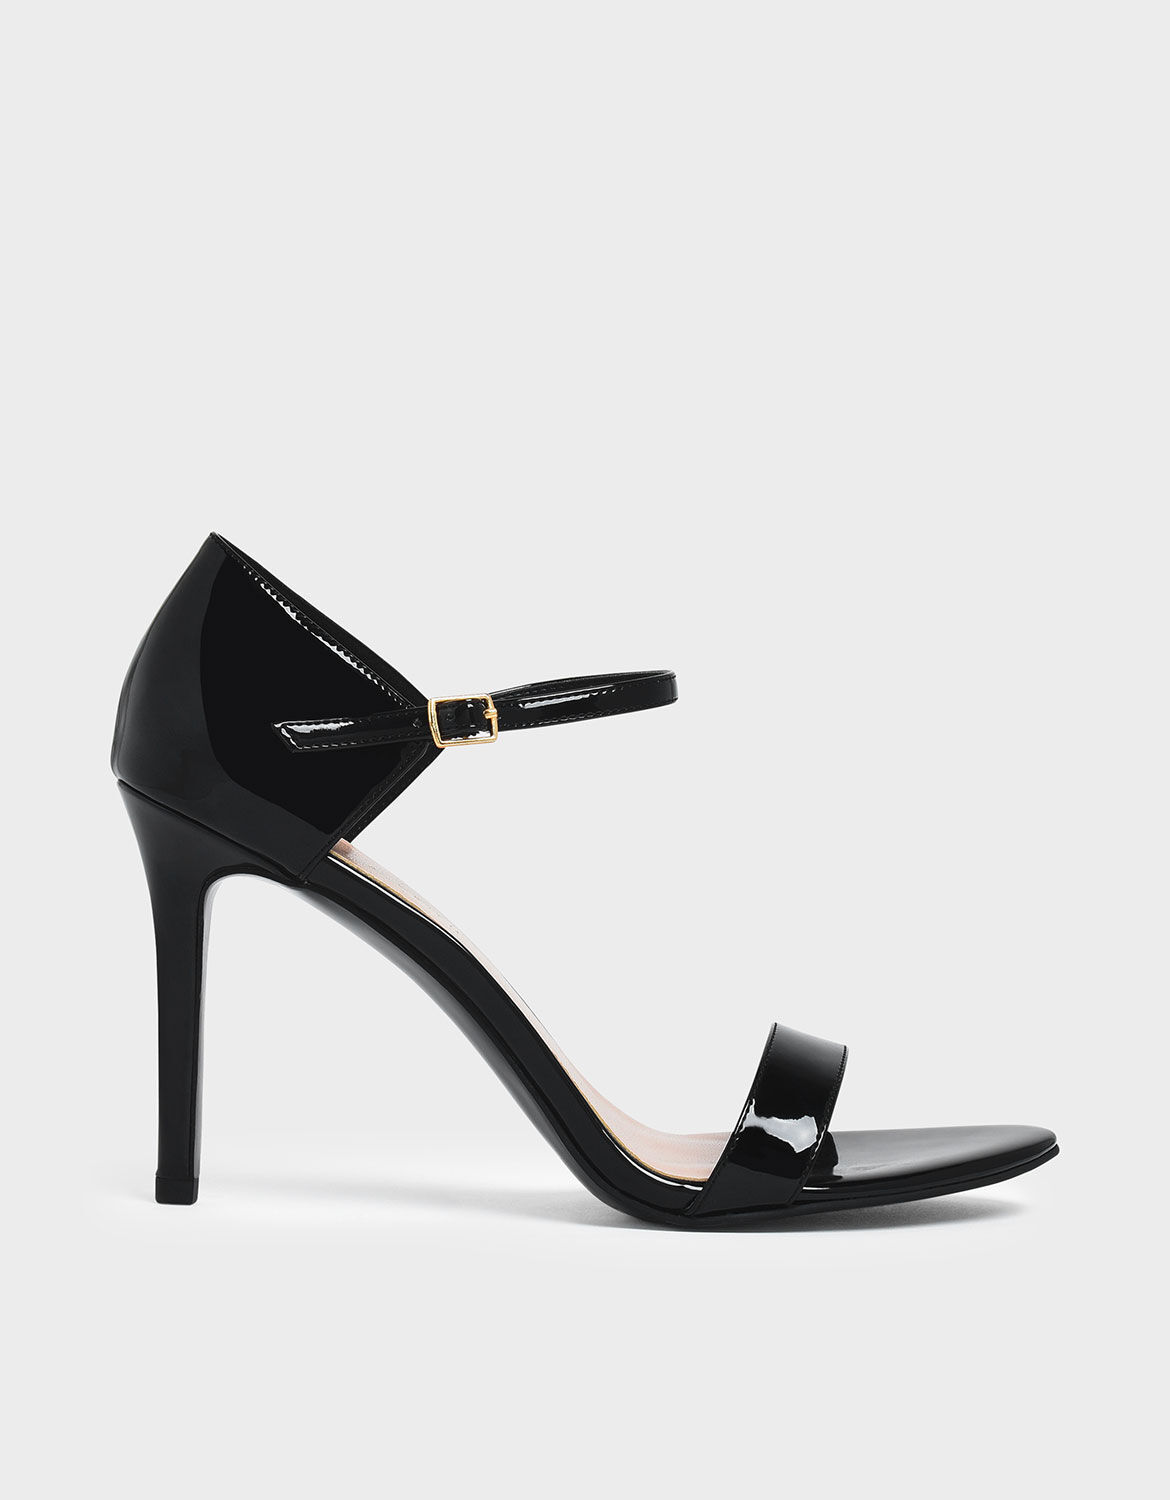 charles and keith black heels